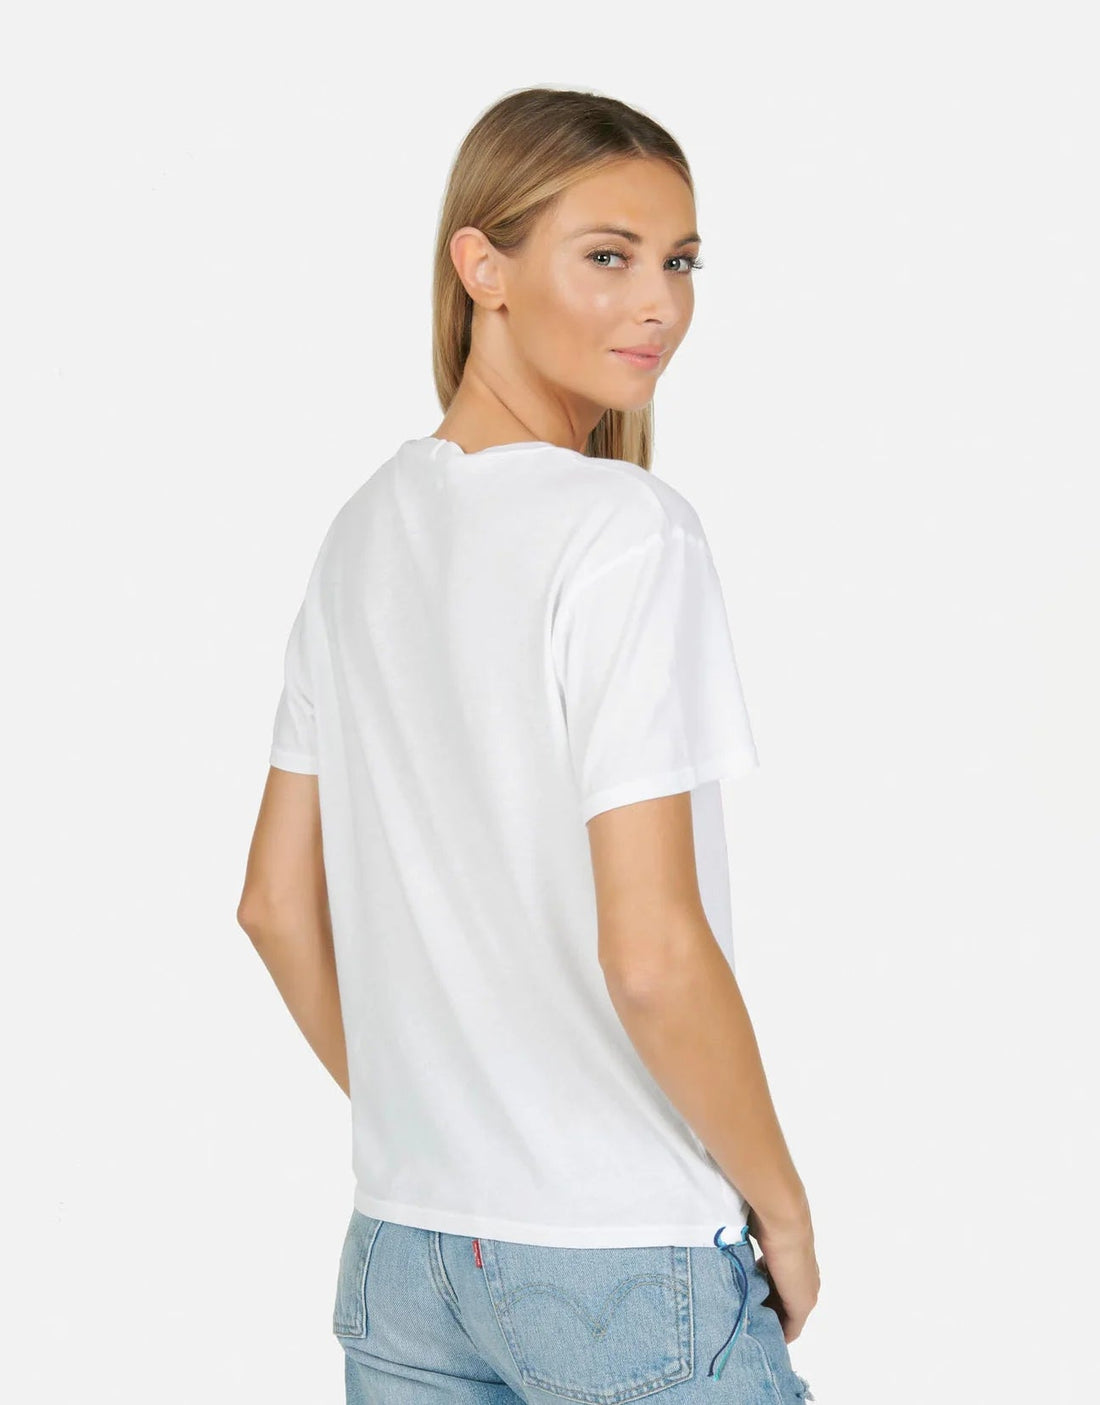 Shop Lauren Moshi Croft X Care Bears T-Shirt - Premium T-Shirt from Lauren Moshi Online now at Spoiled Brat 